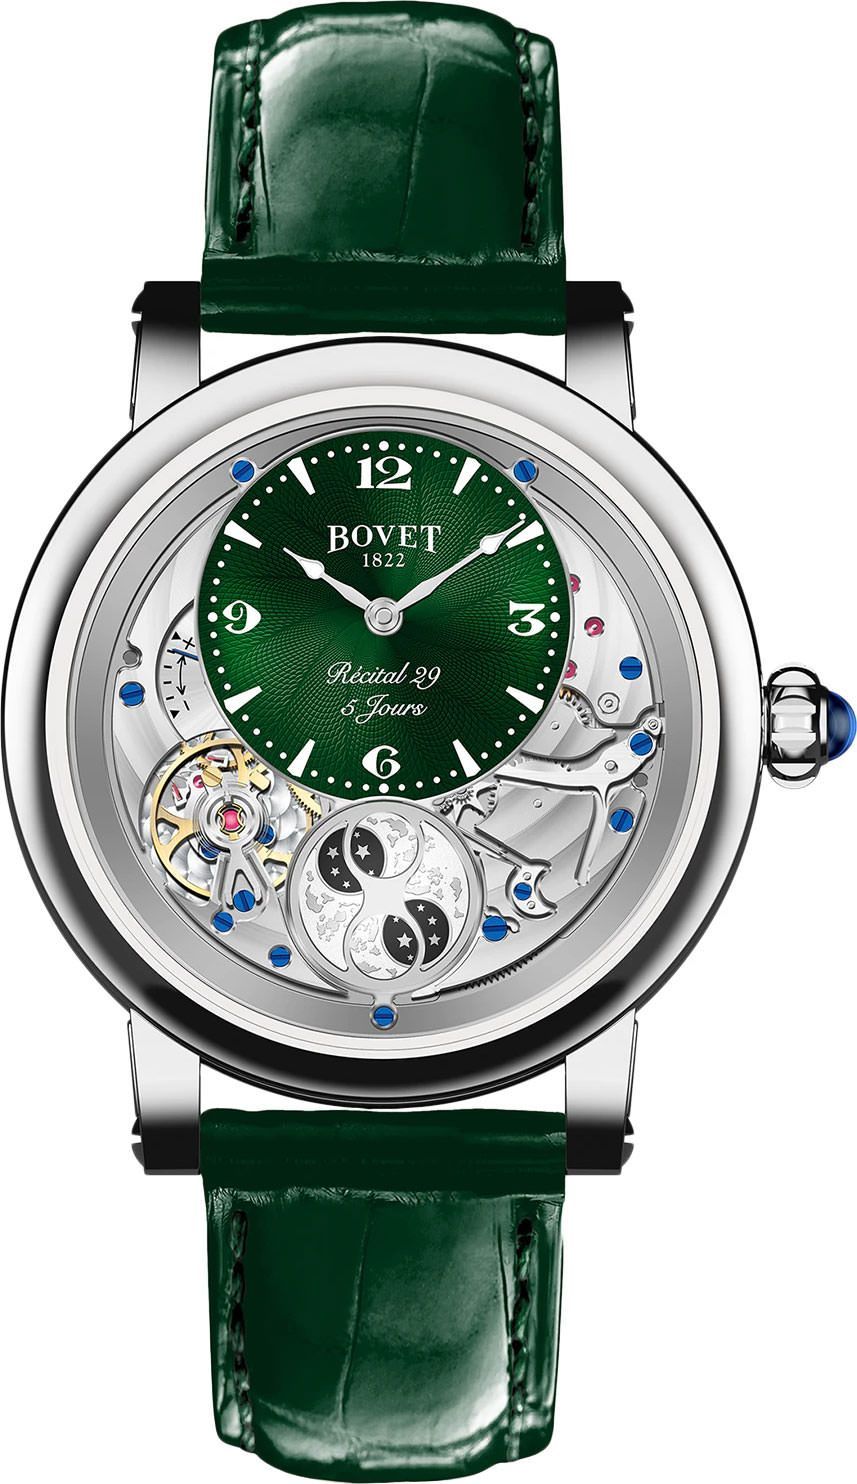 Bovet Récital 29 42 mm Watch in Green Dial For Men - 1